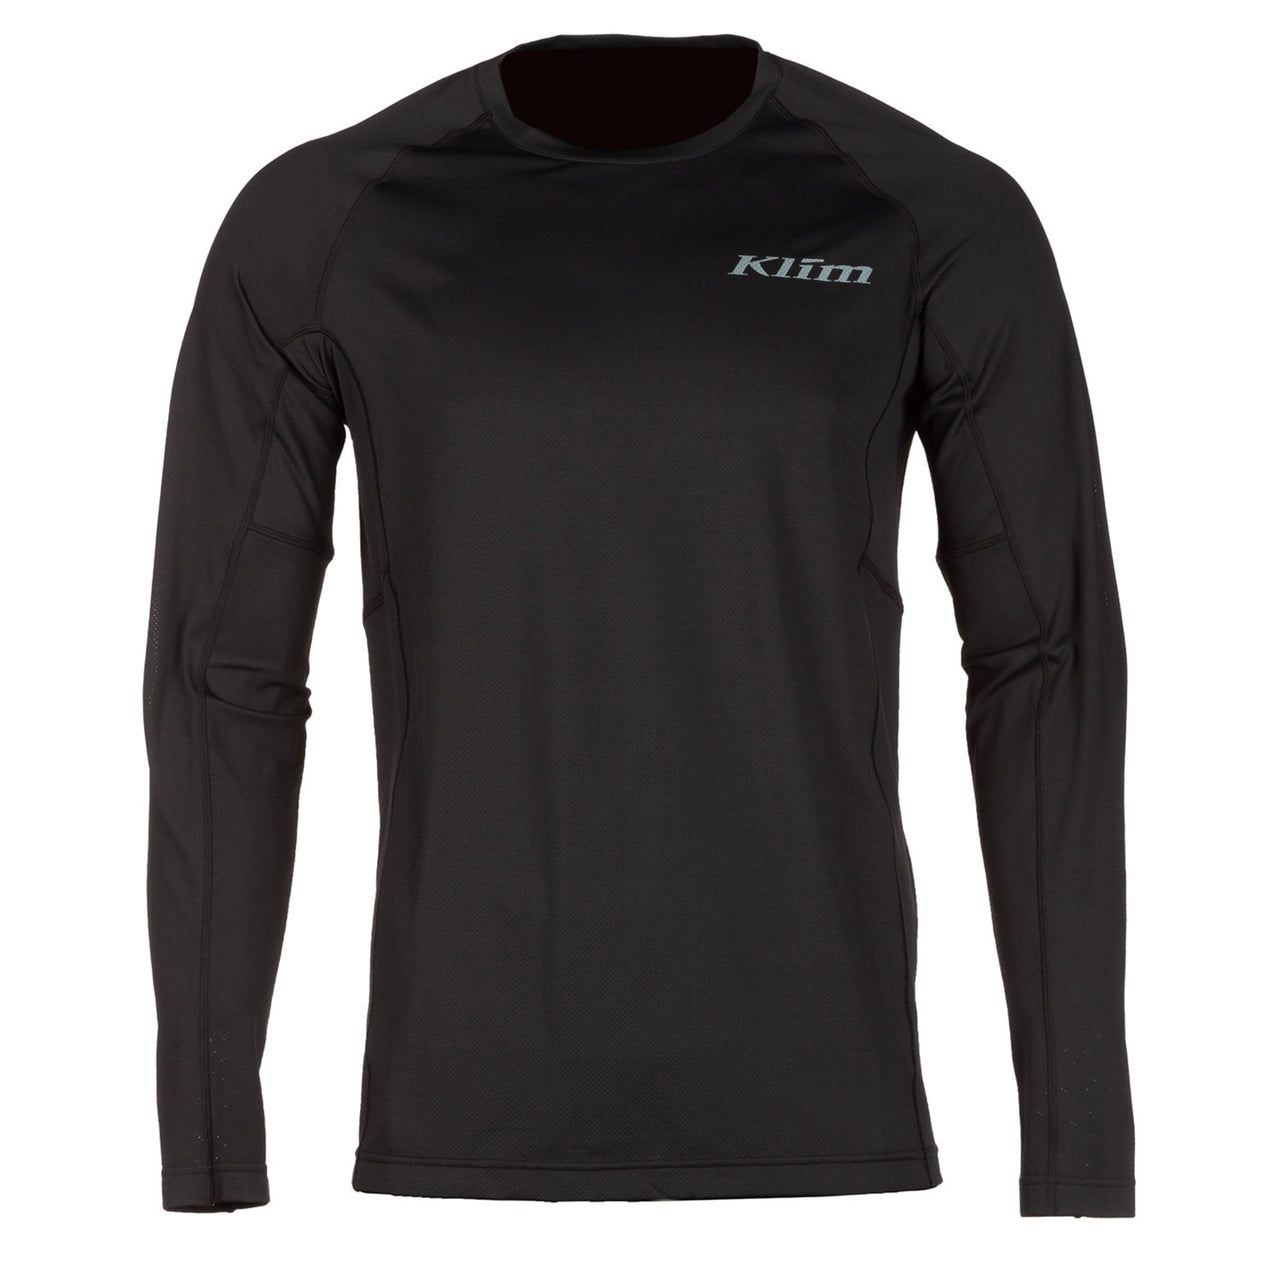 Klim Aggressor -1.0 Cooling Base Layers Long Sleeve Shirt Black